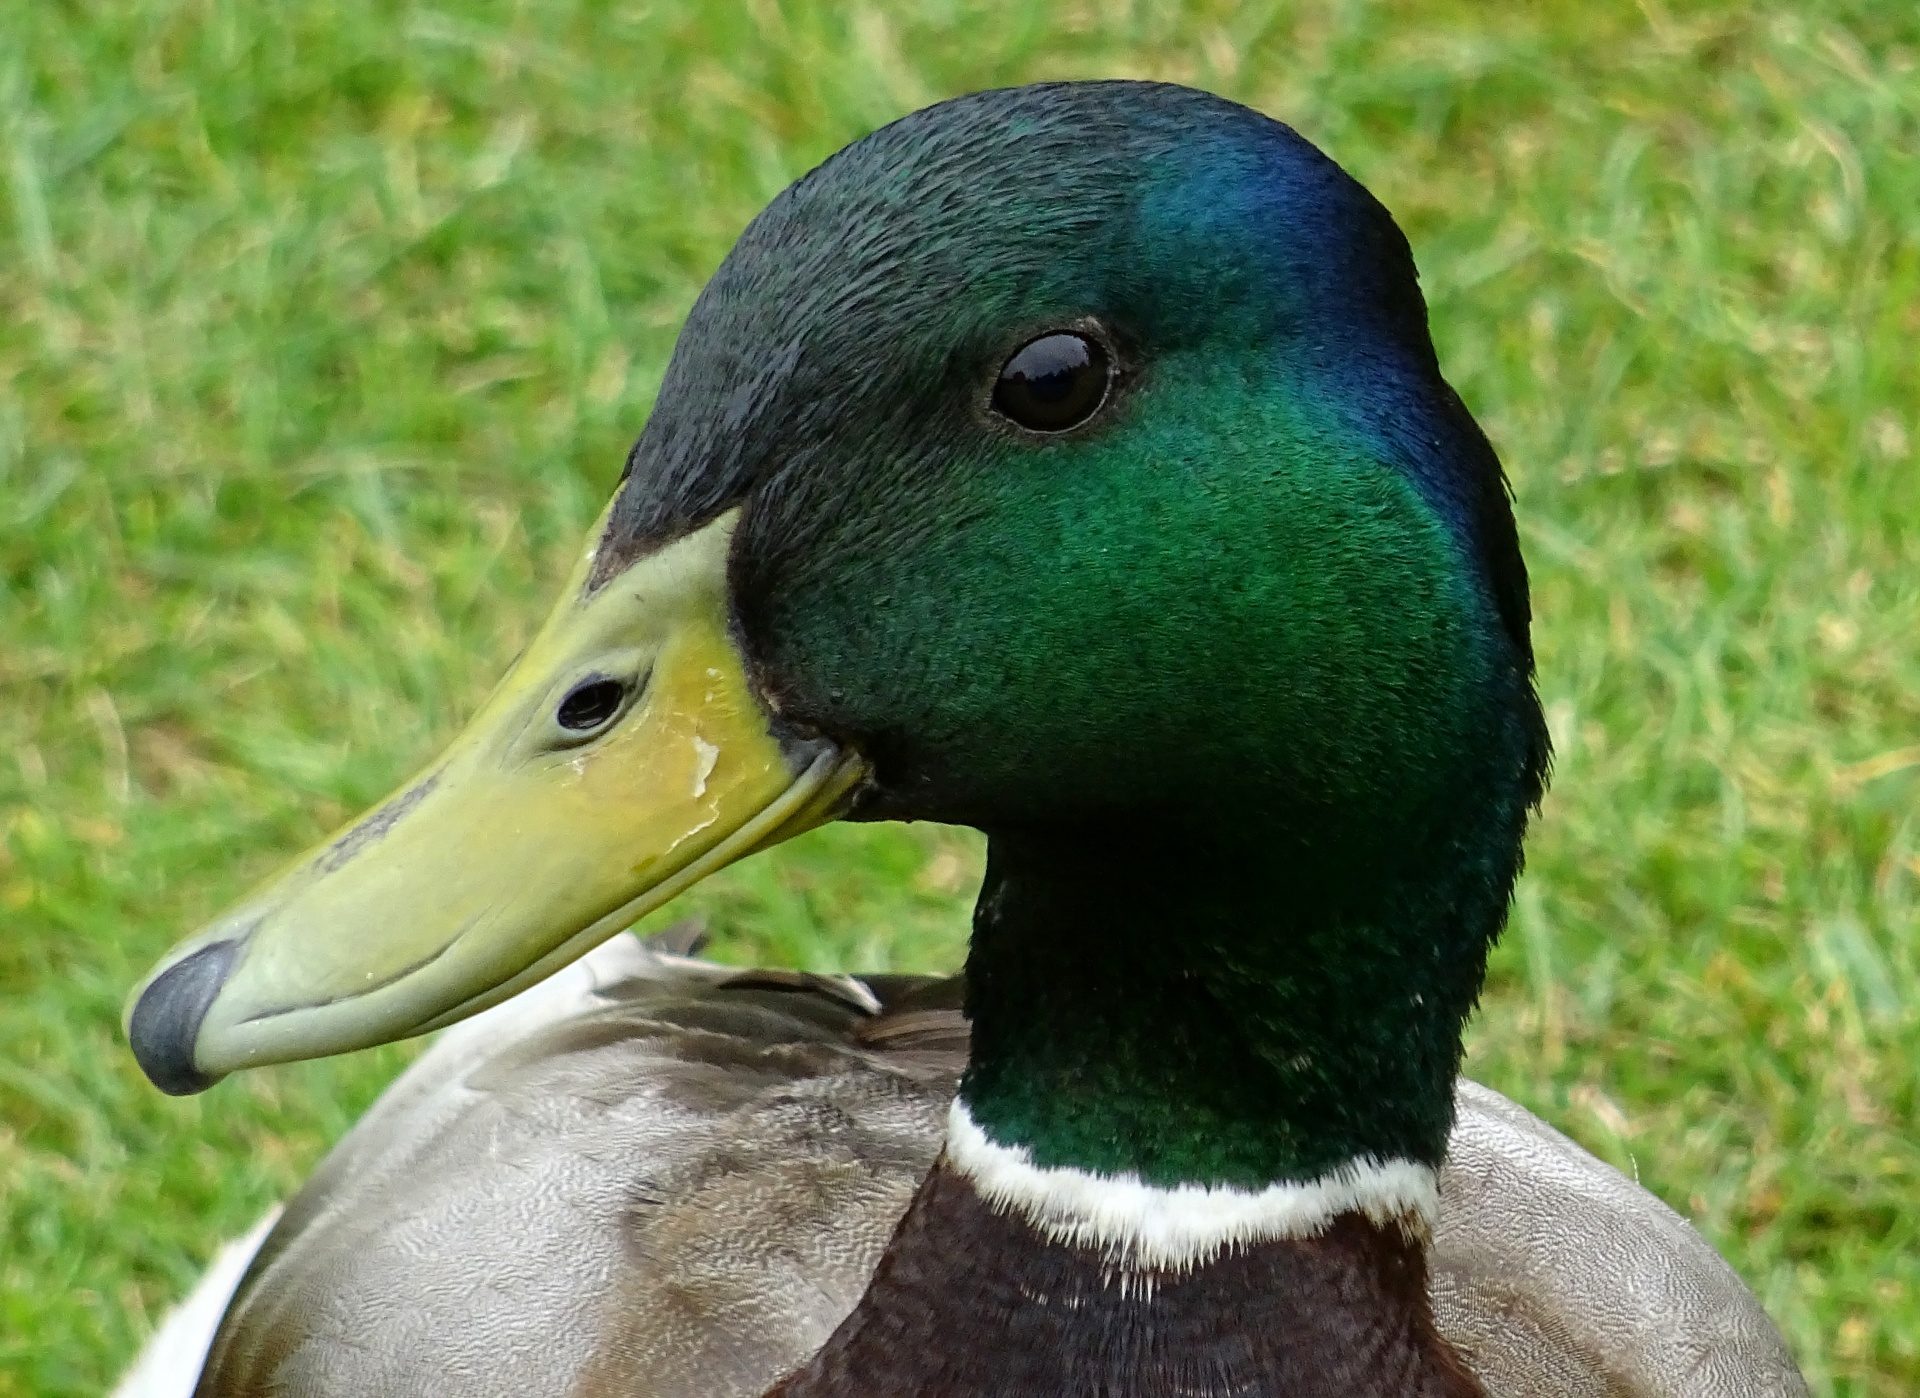 ducks-head-closeup-free-stock-photo-public-domain-pictures